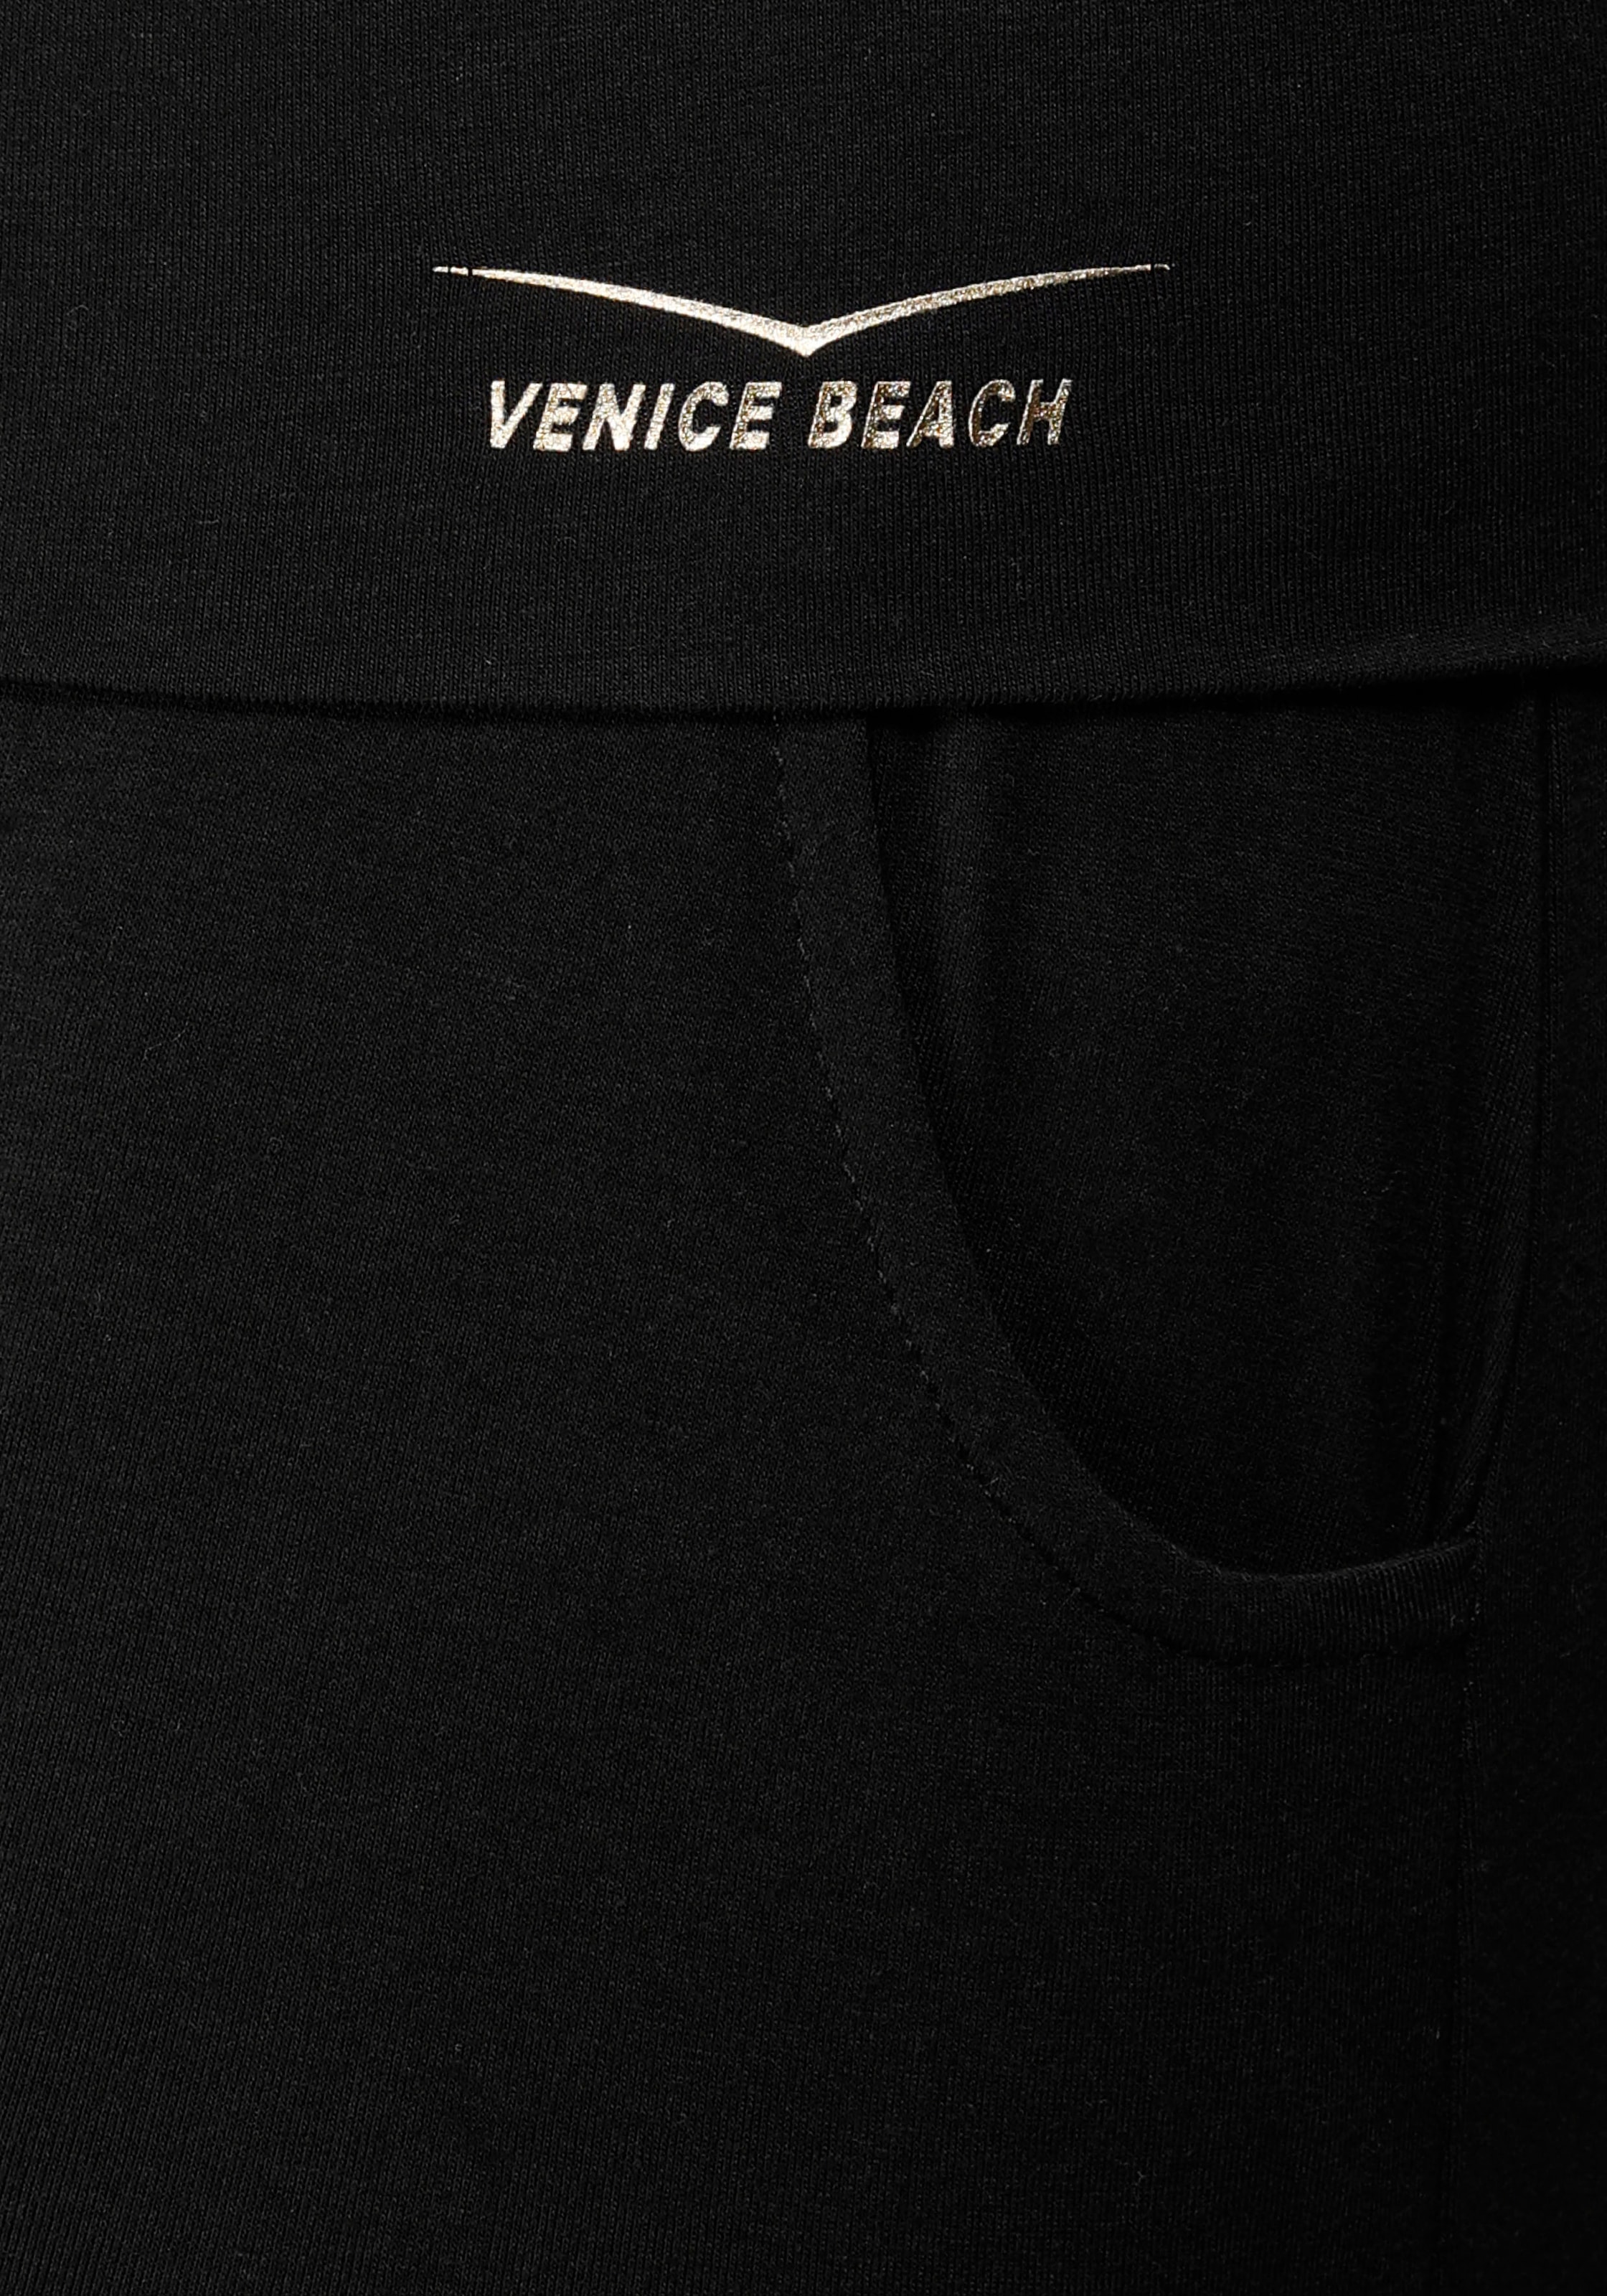 Venice Beach Yogahose online bestellen